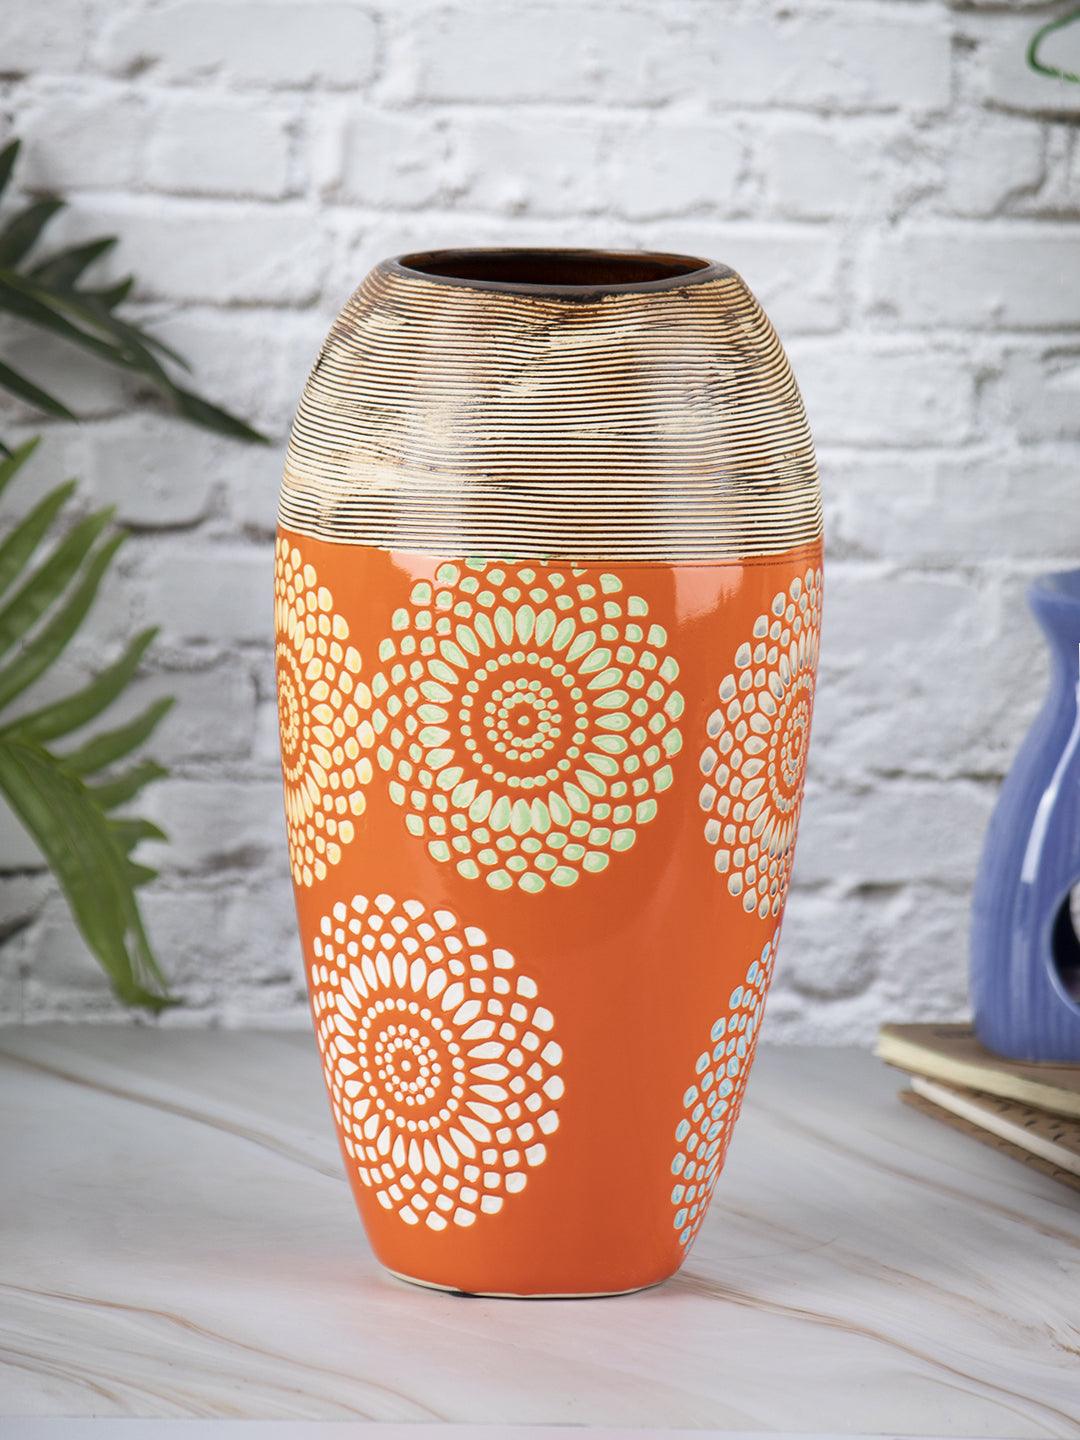 VON CASA Ceramic Multicolor Oval Shaped Vase - VON CASA